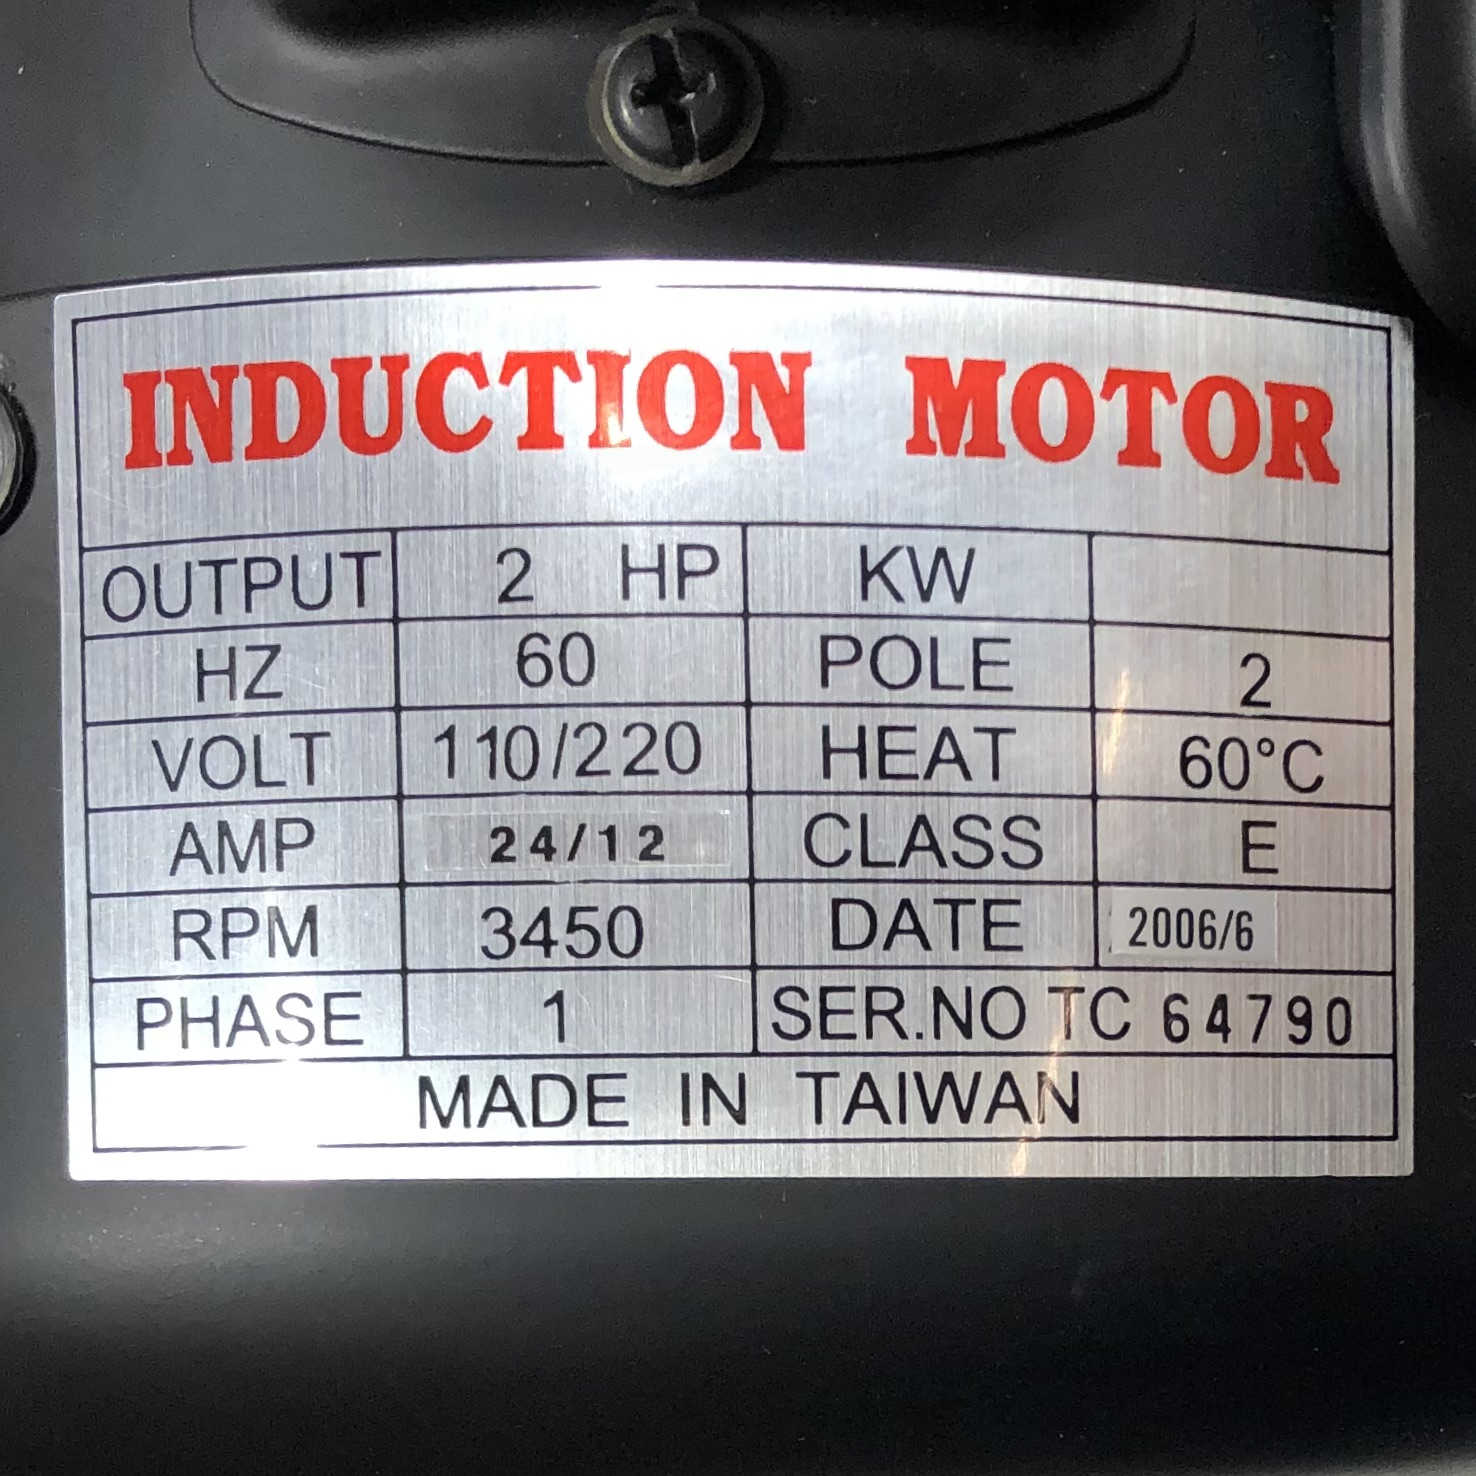 1.471KW Induction Motor 2Hp, 60Hz, 110/220V,  24/12Amp, 3450Rpm, 1Ph 5